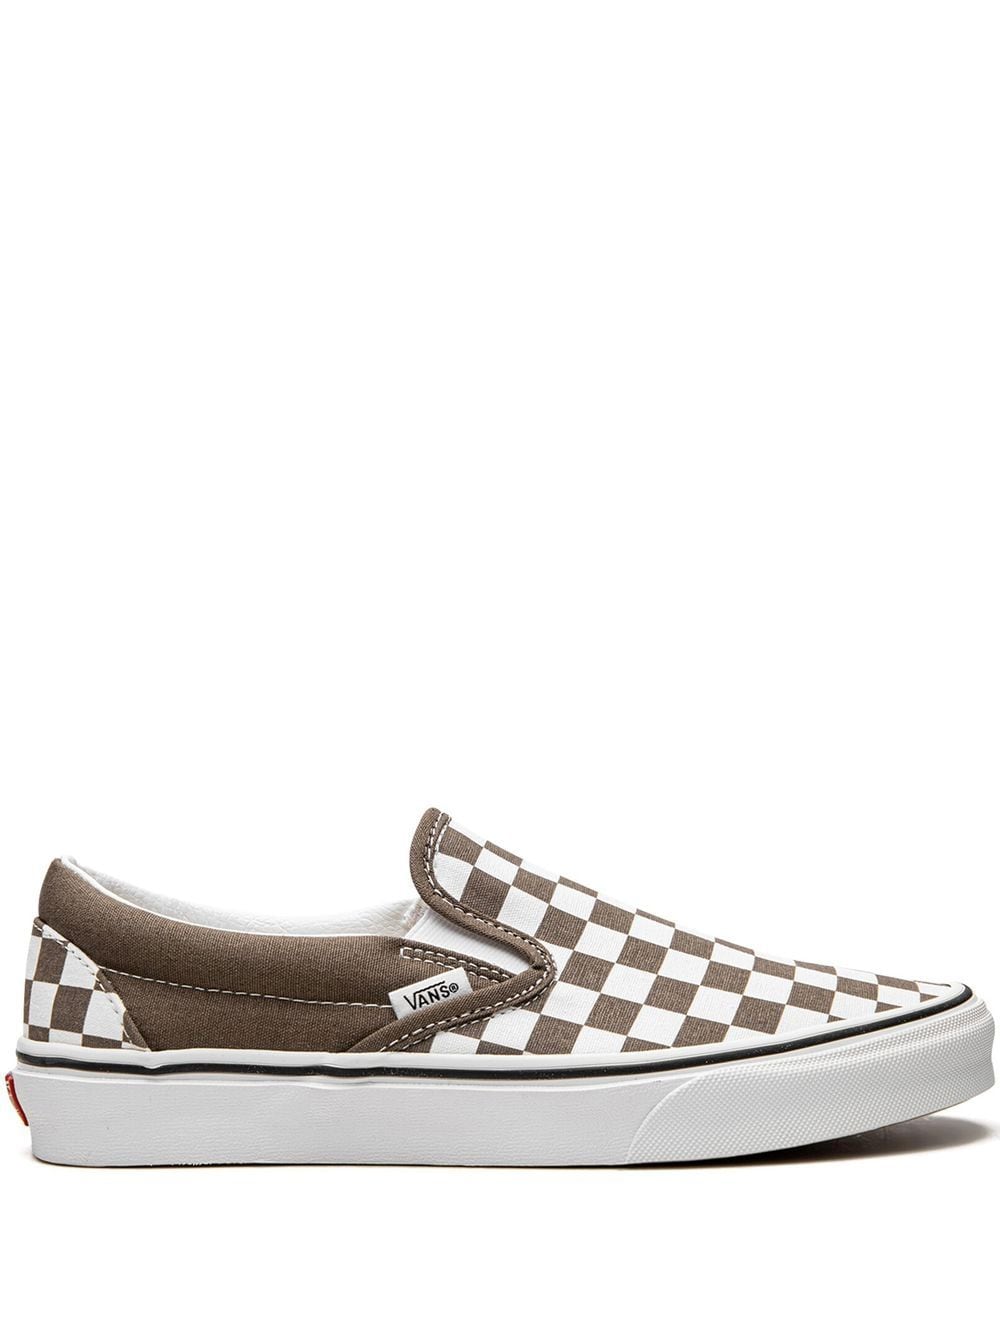 Vans Checkerboard Classic Slip On sneakers - Brown von Vans